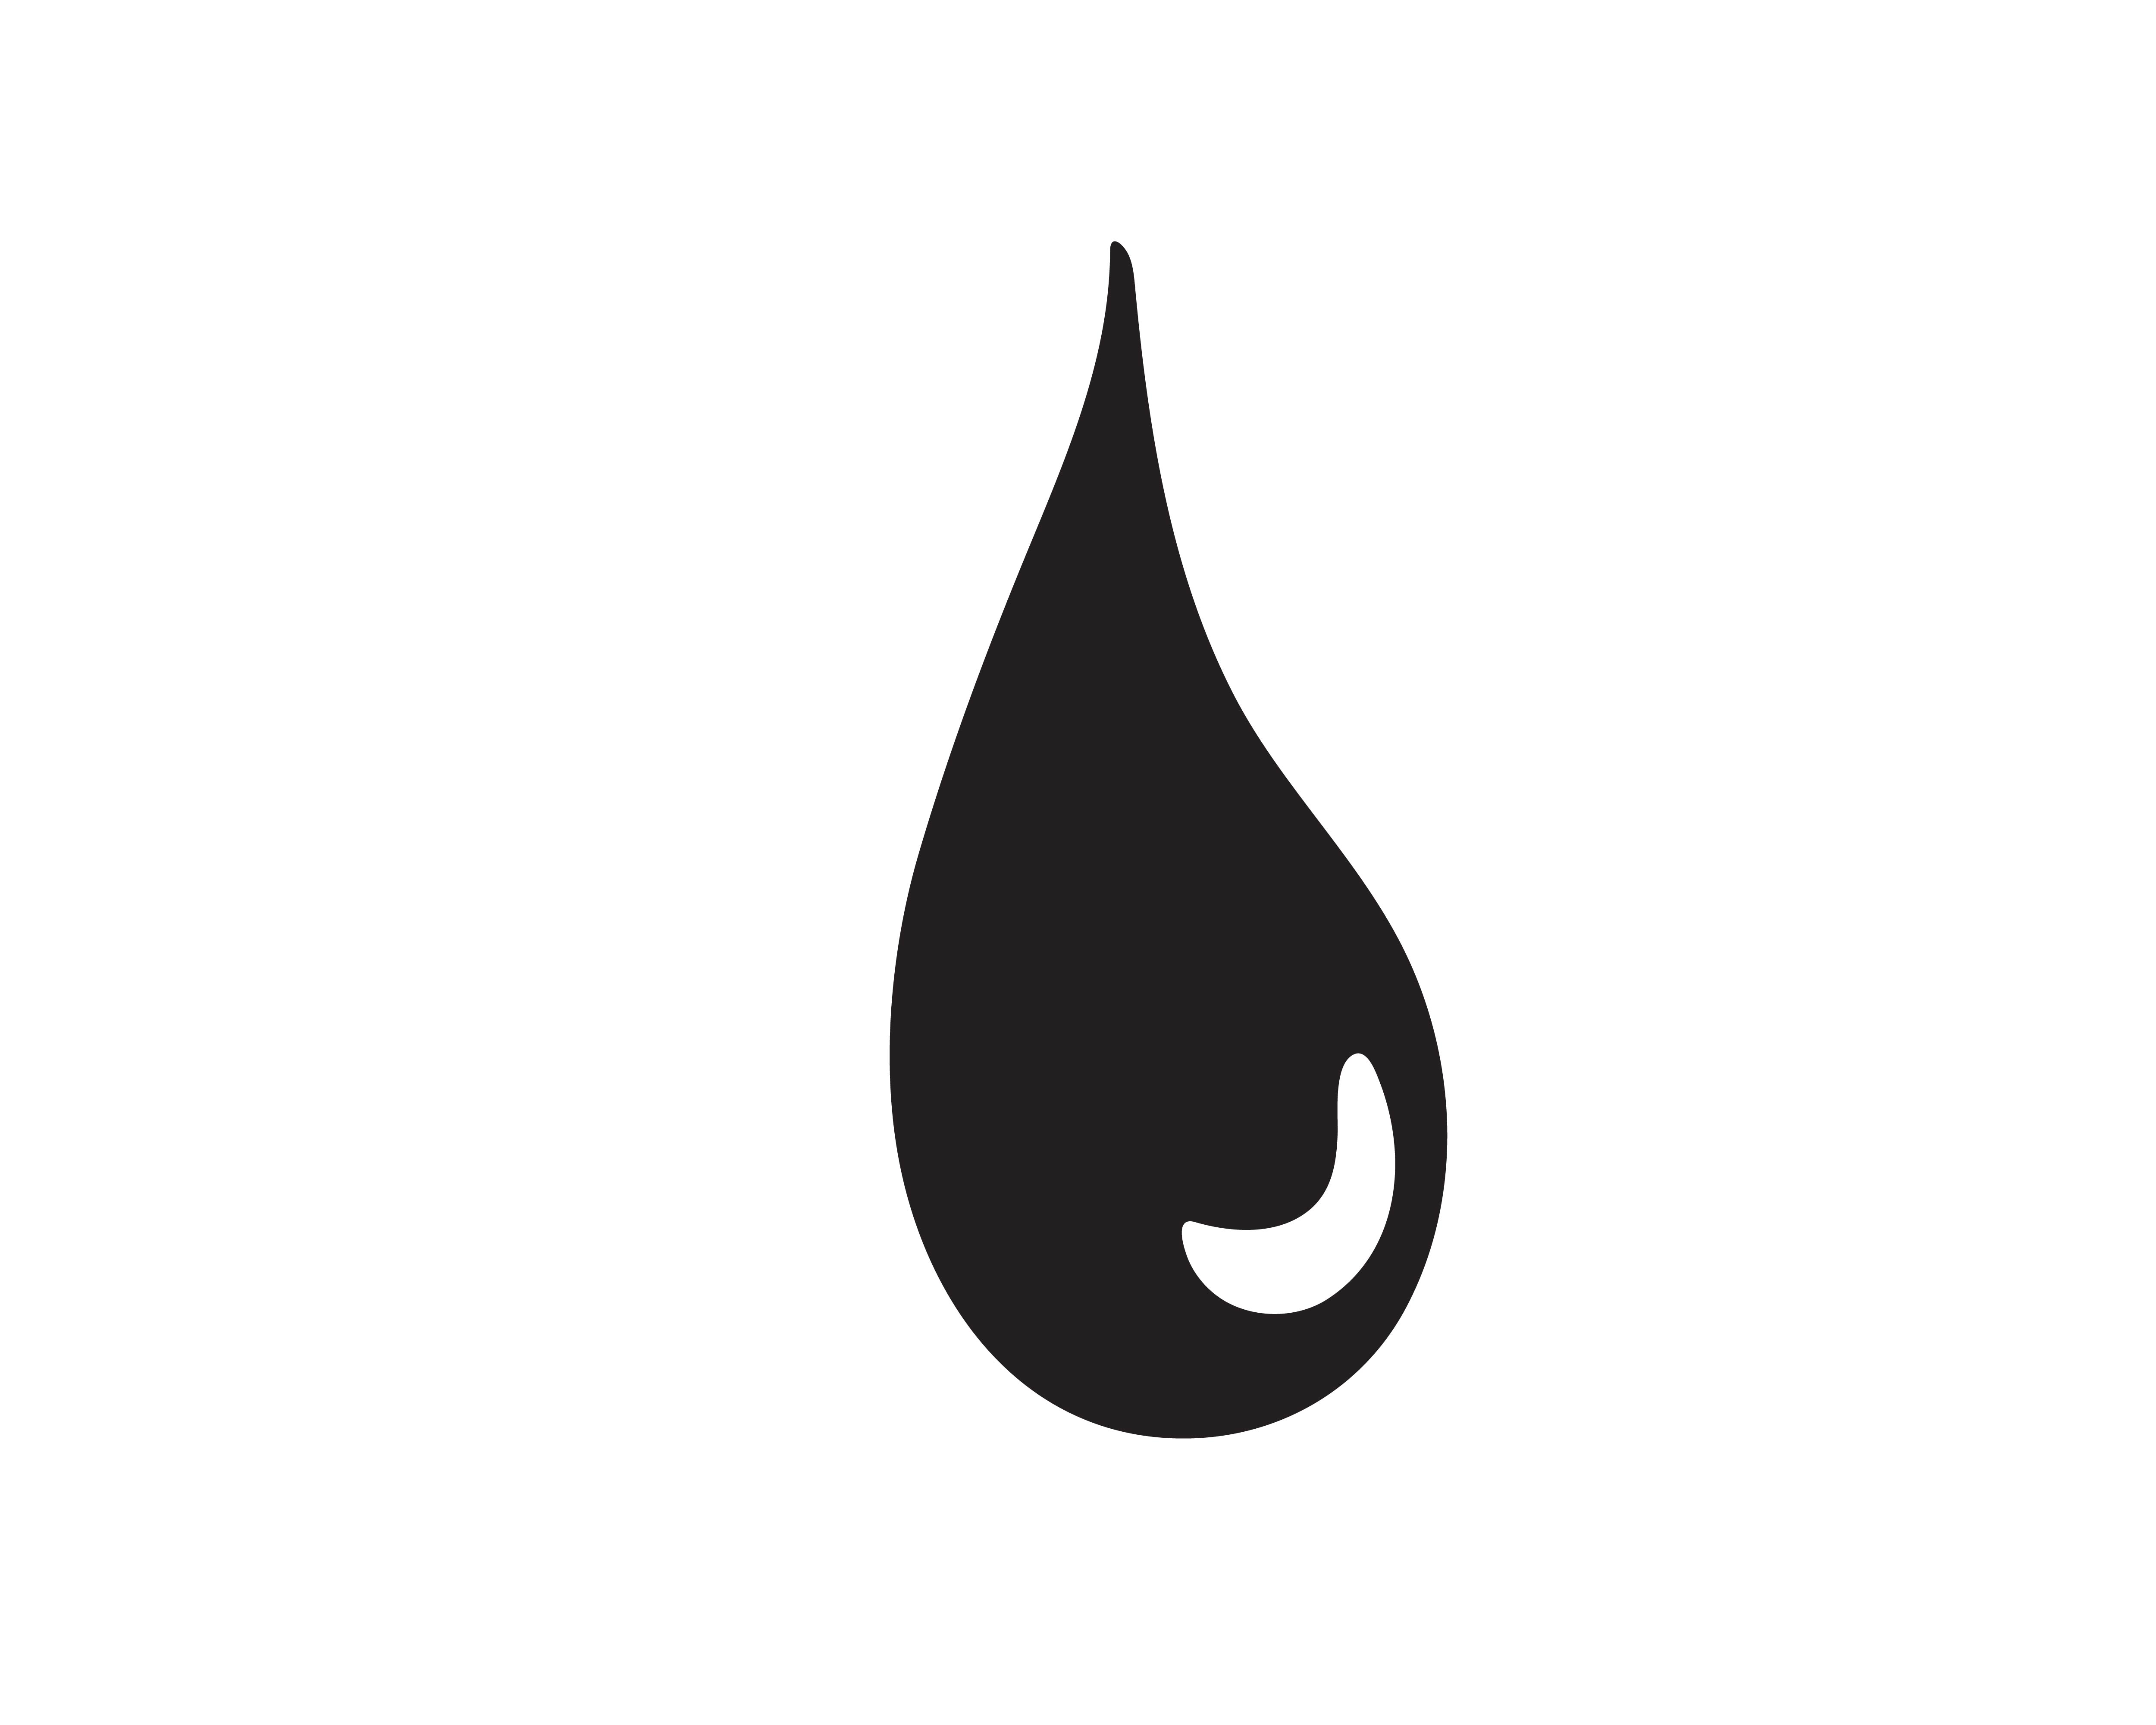 Water drop black n color logos - Download Free Vectors ...